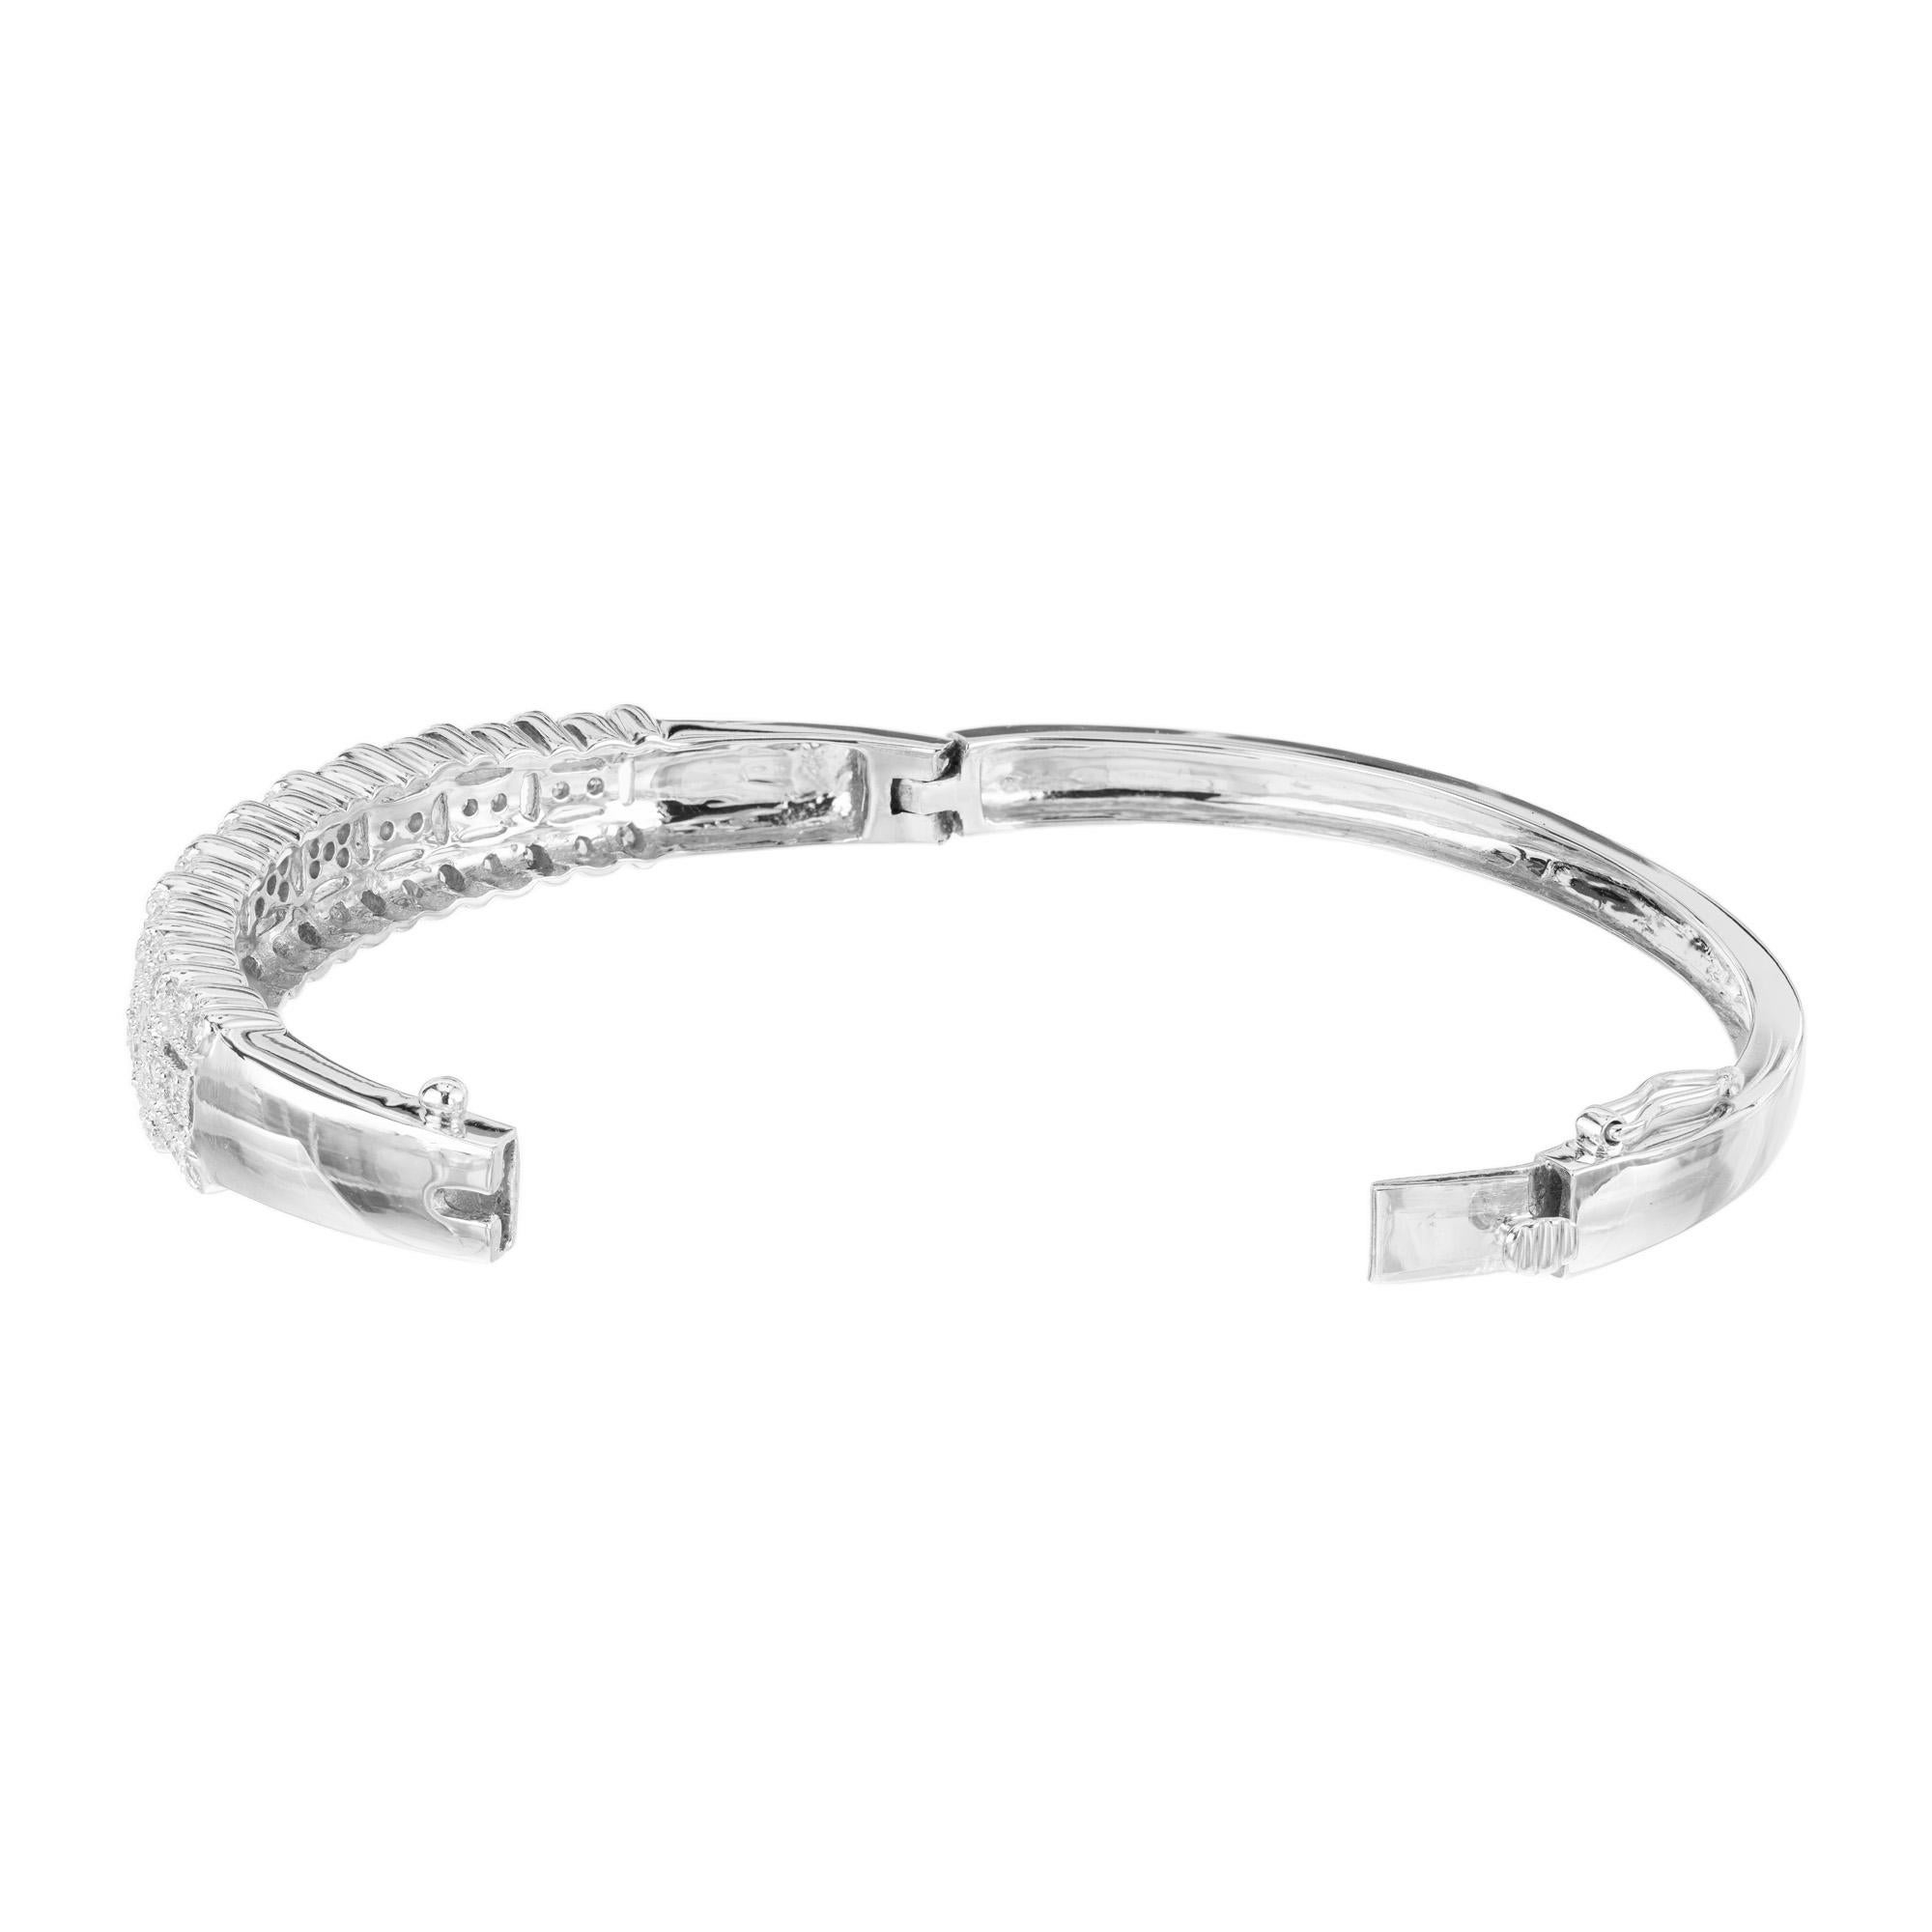 Round Cut 1.20 Carat Diamond White Gold Bangle Bracelet For Sale